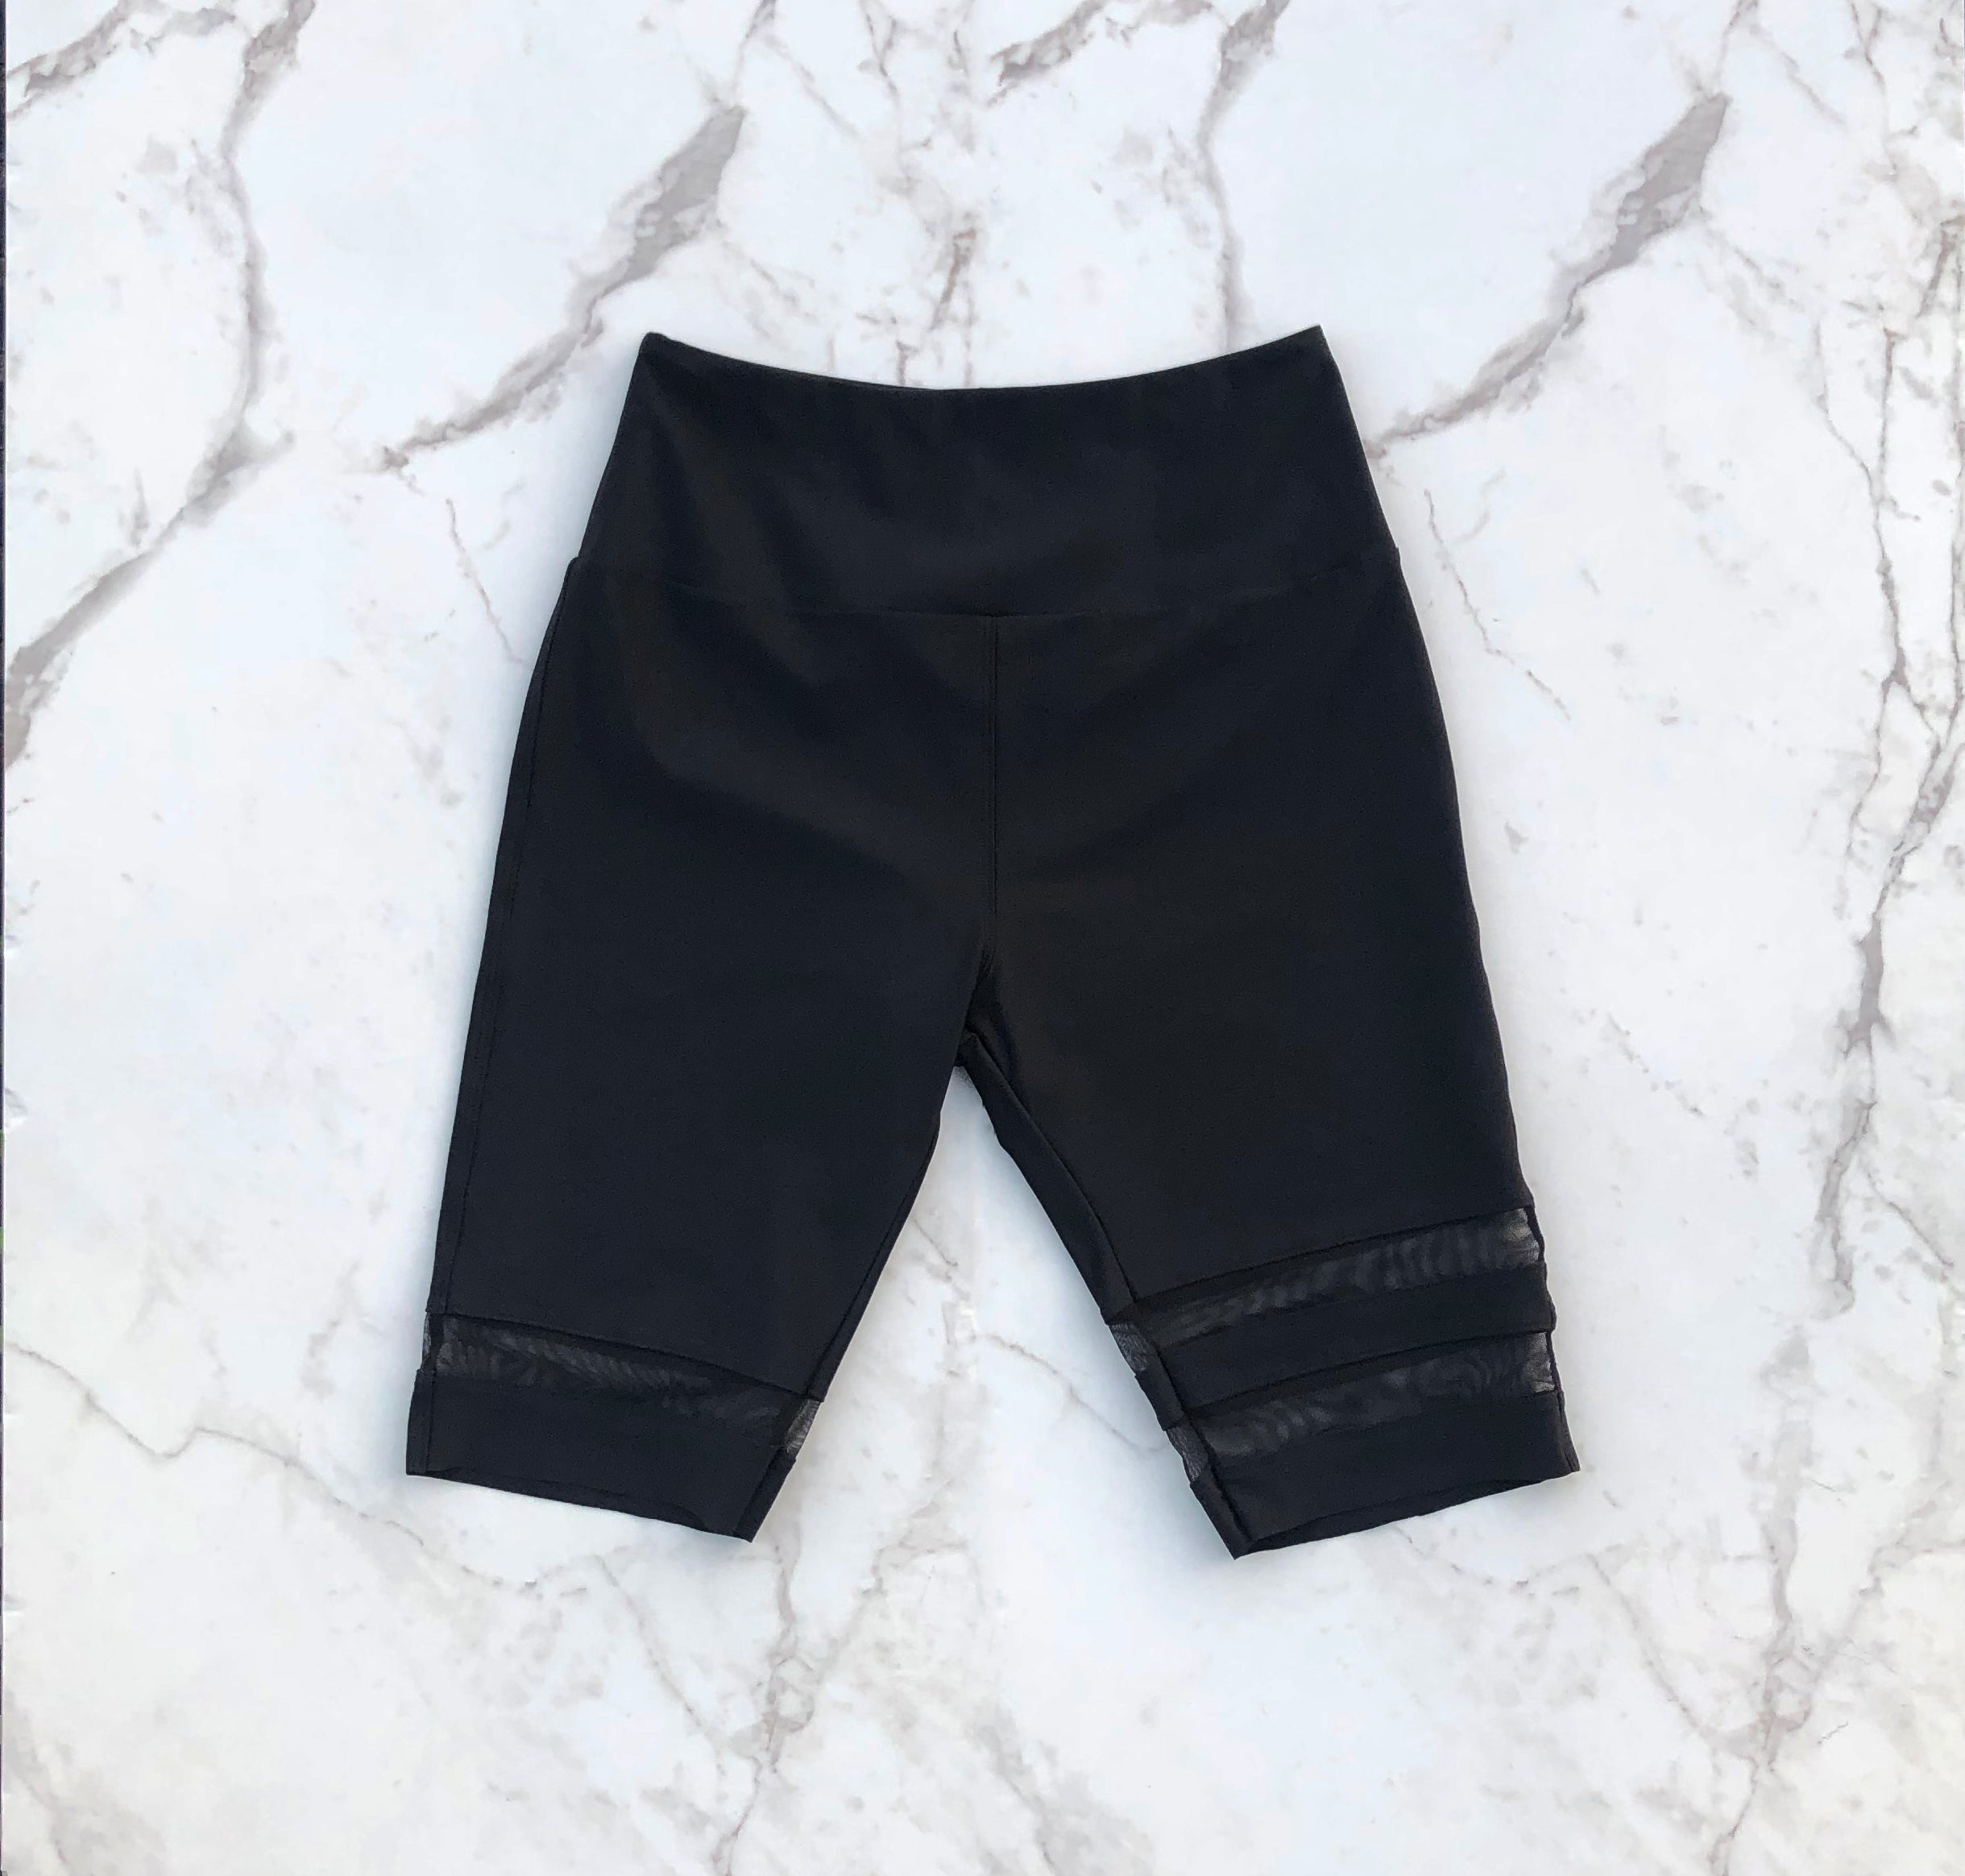 Biker short – Black - Selfish swimwear Bottom